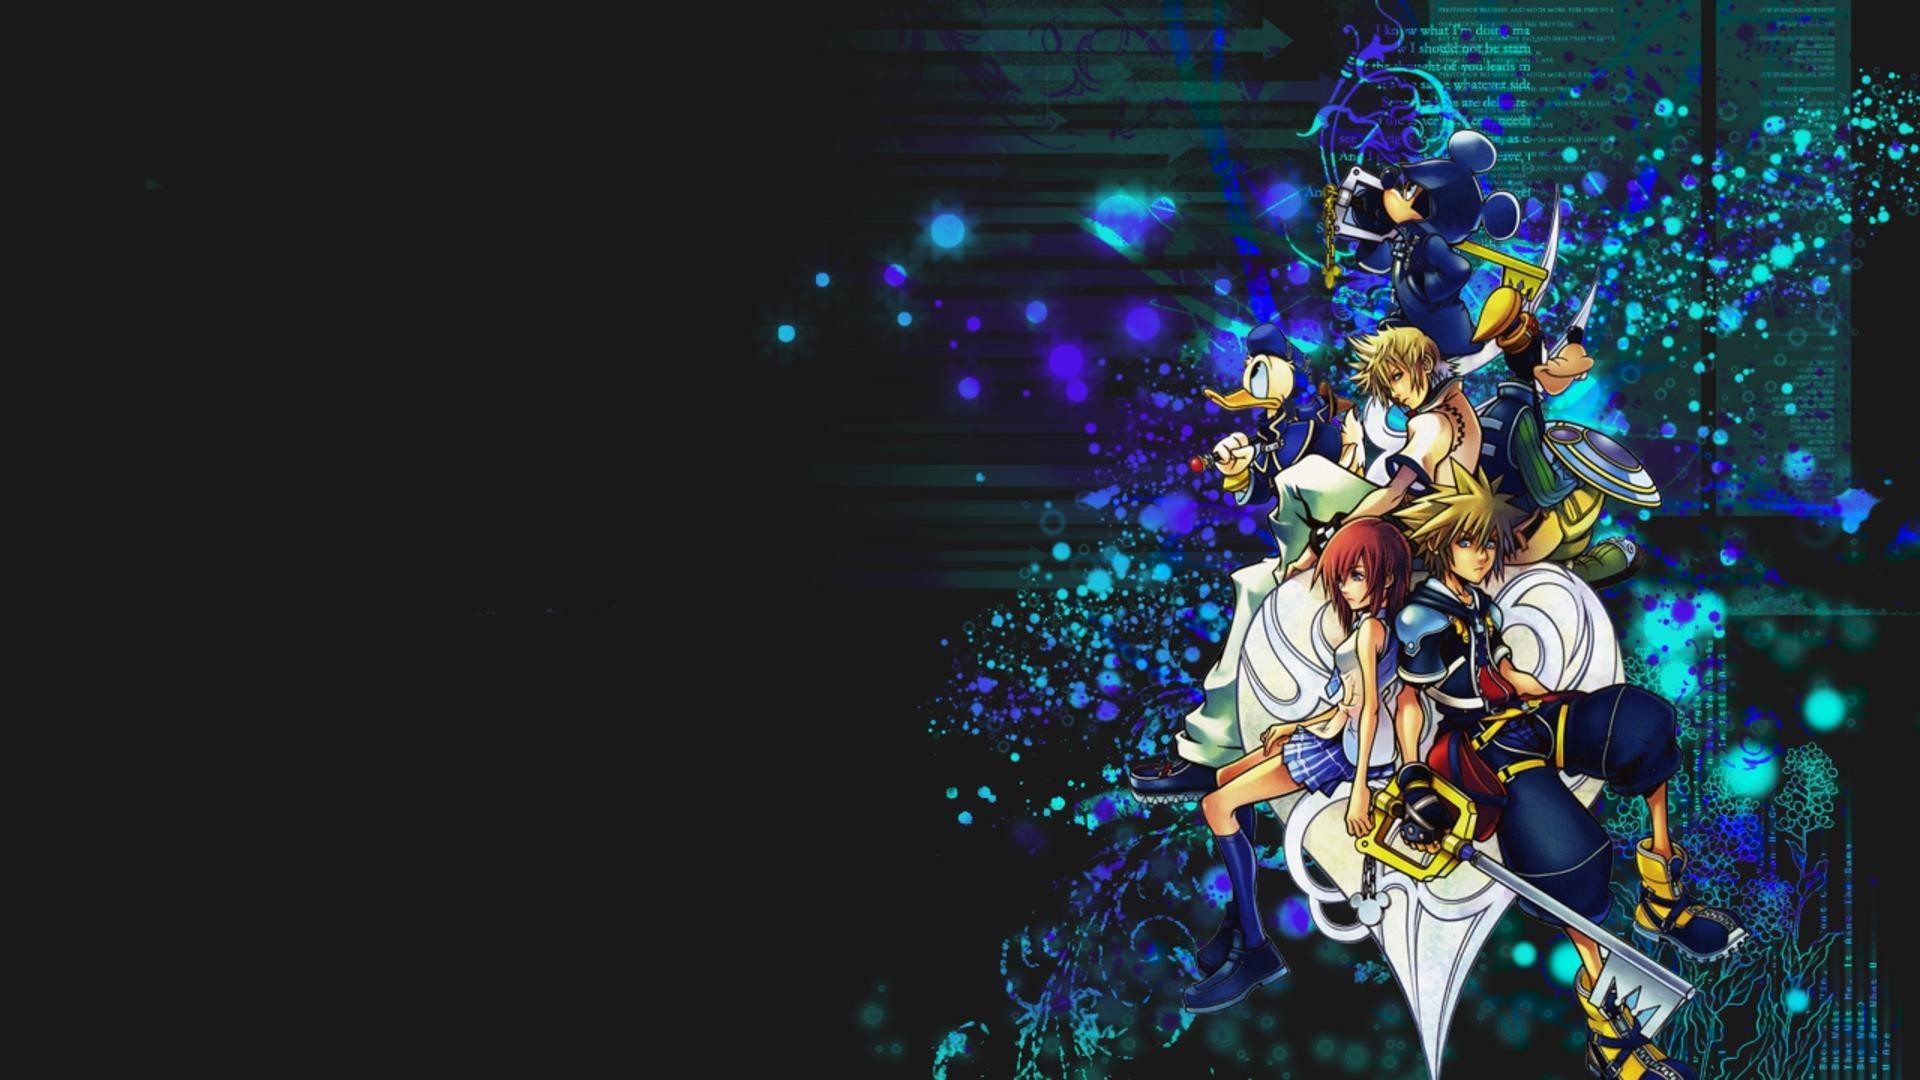 1920x1080 Kingdom Hearts Wallpapers HD Download Â· Download Â· Reveal ...